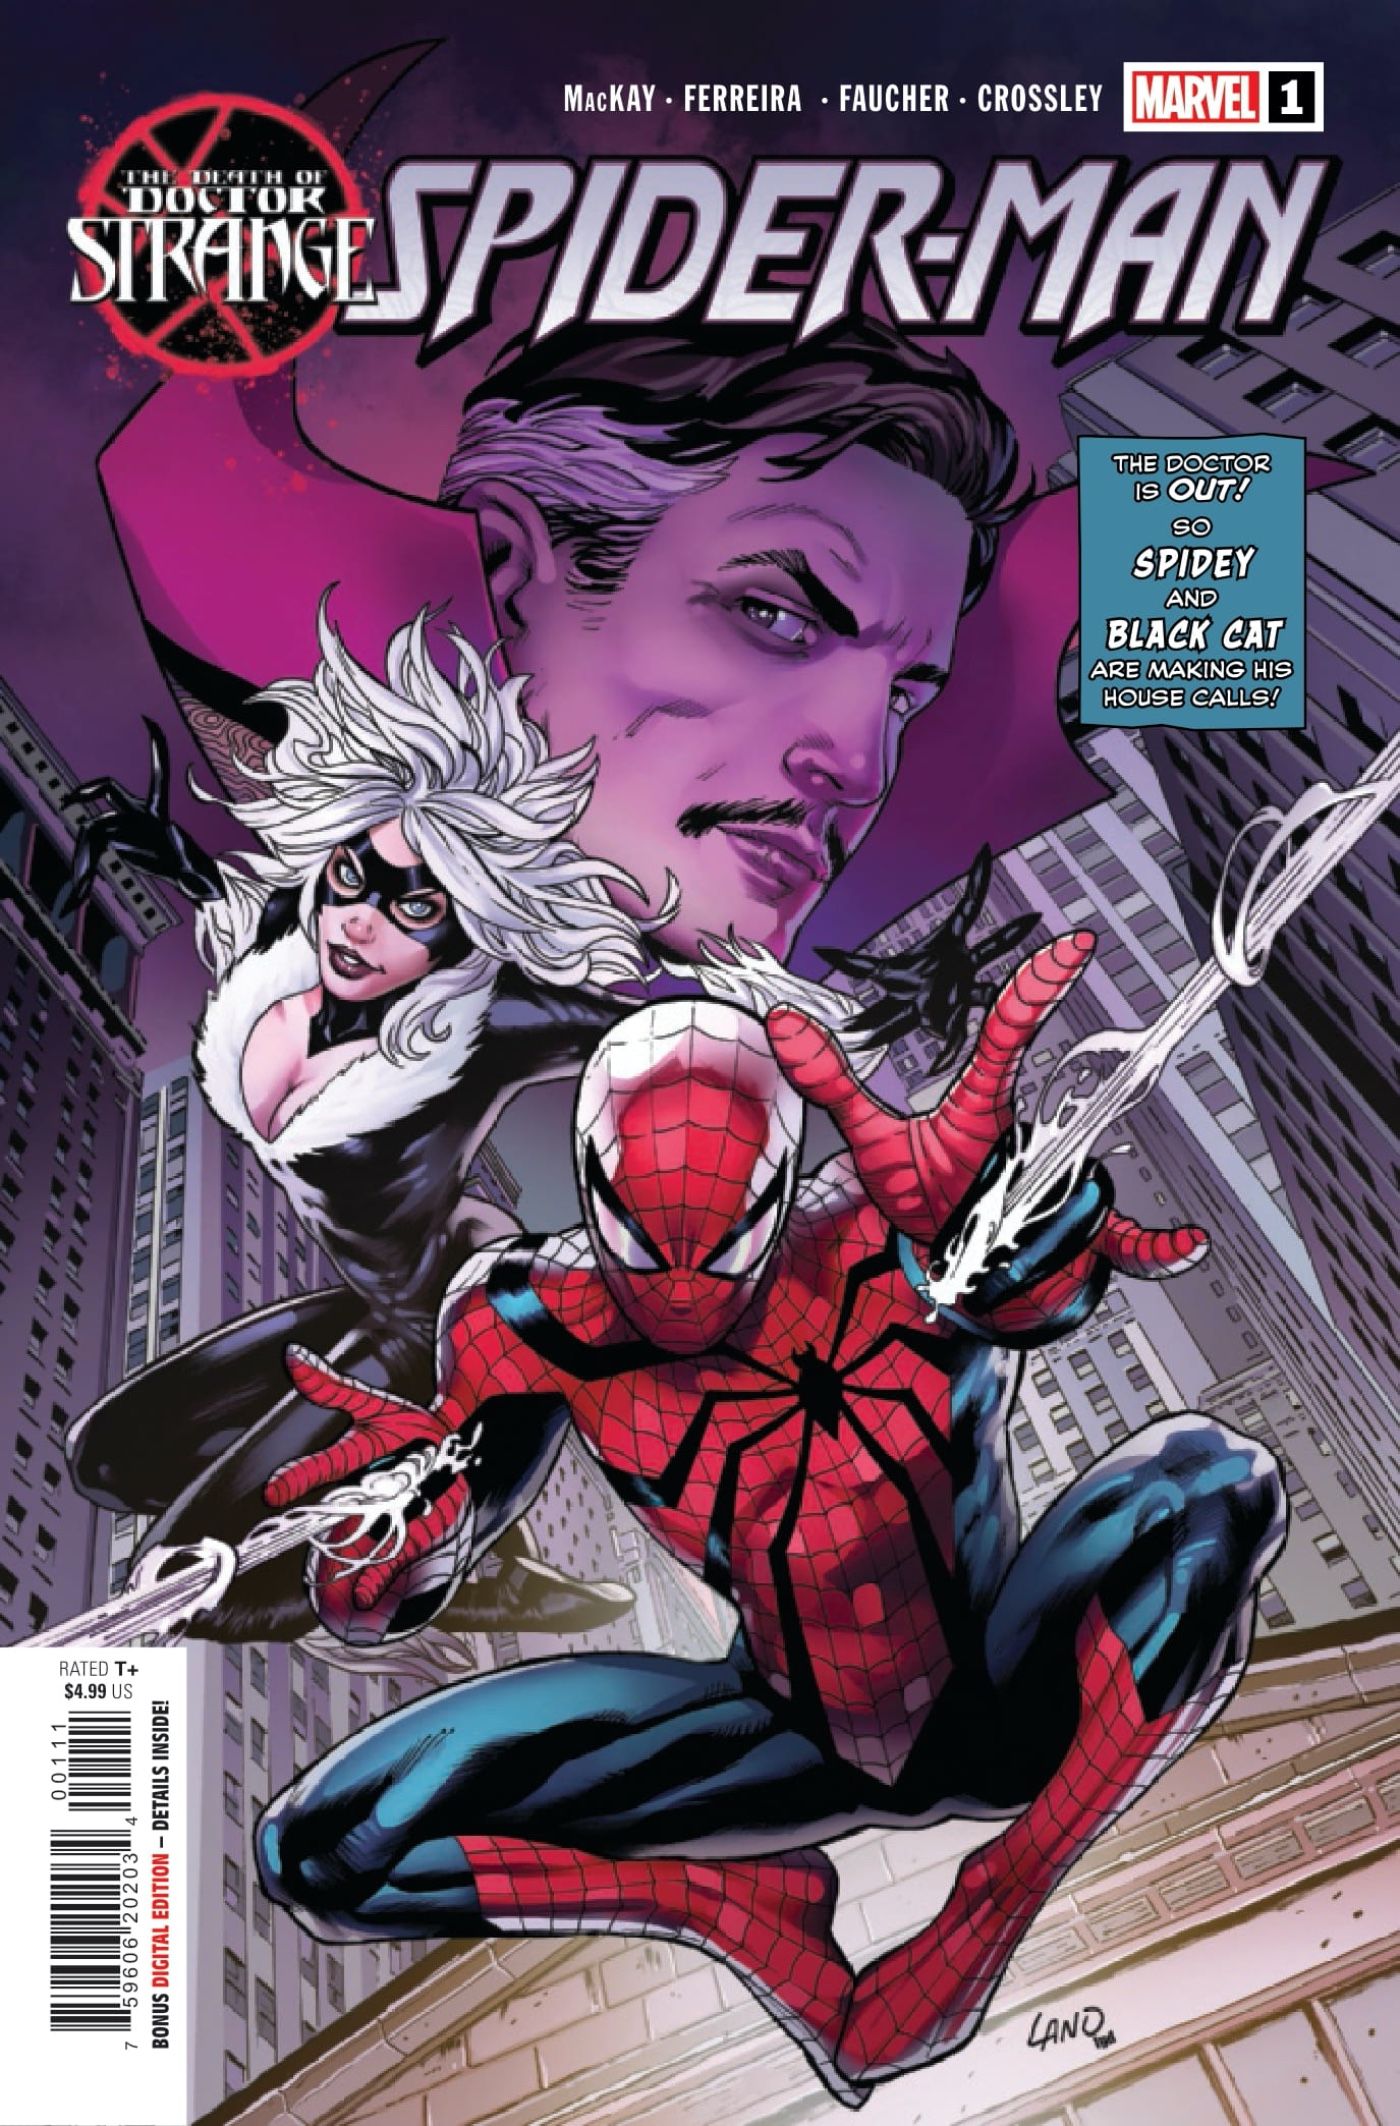 Death of Dr. Strange cover, showing Spider-Man and Black Cat